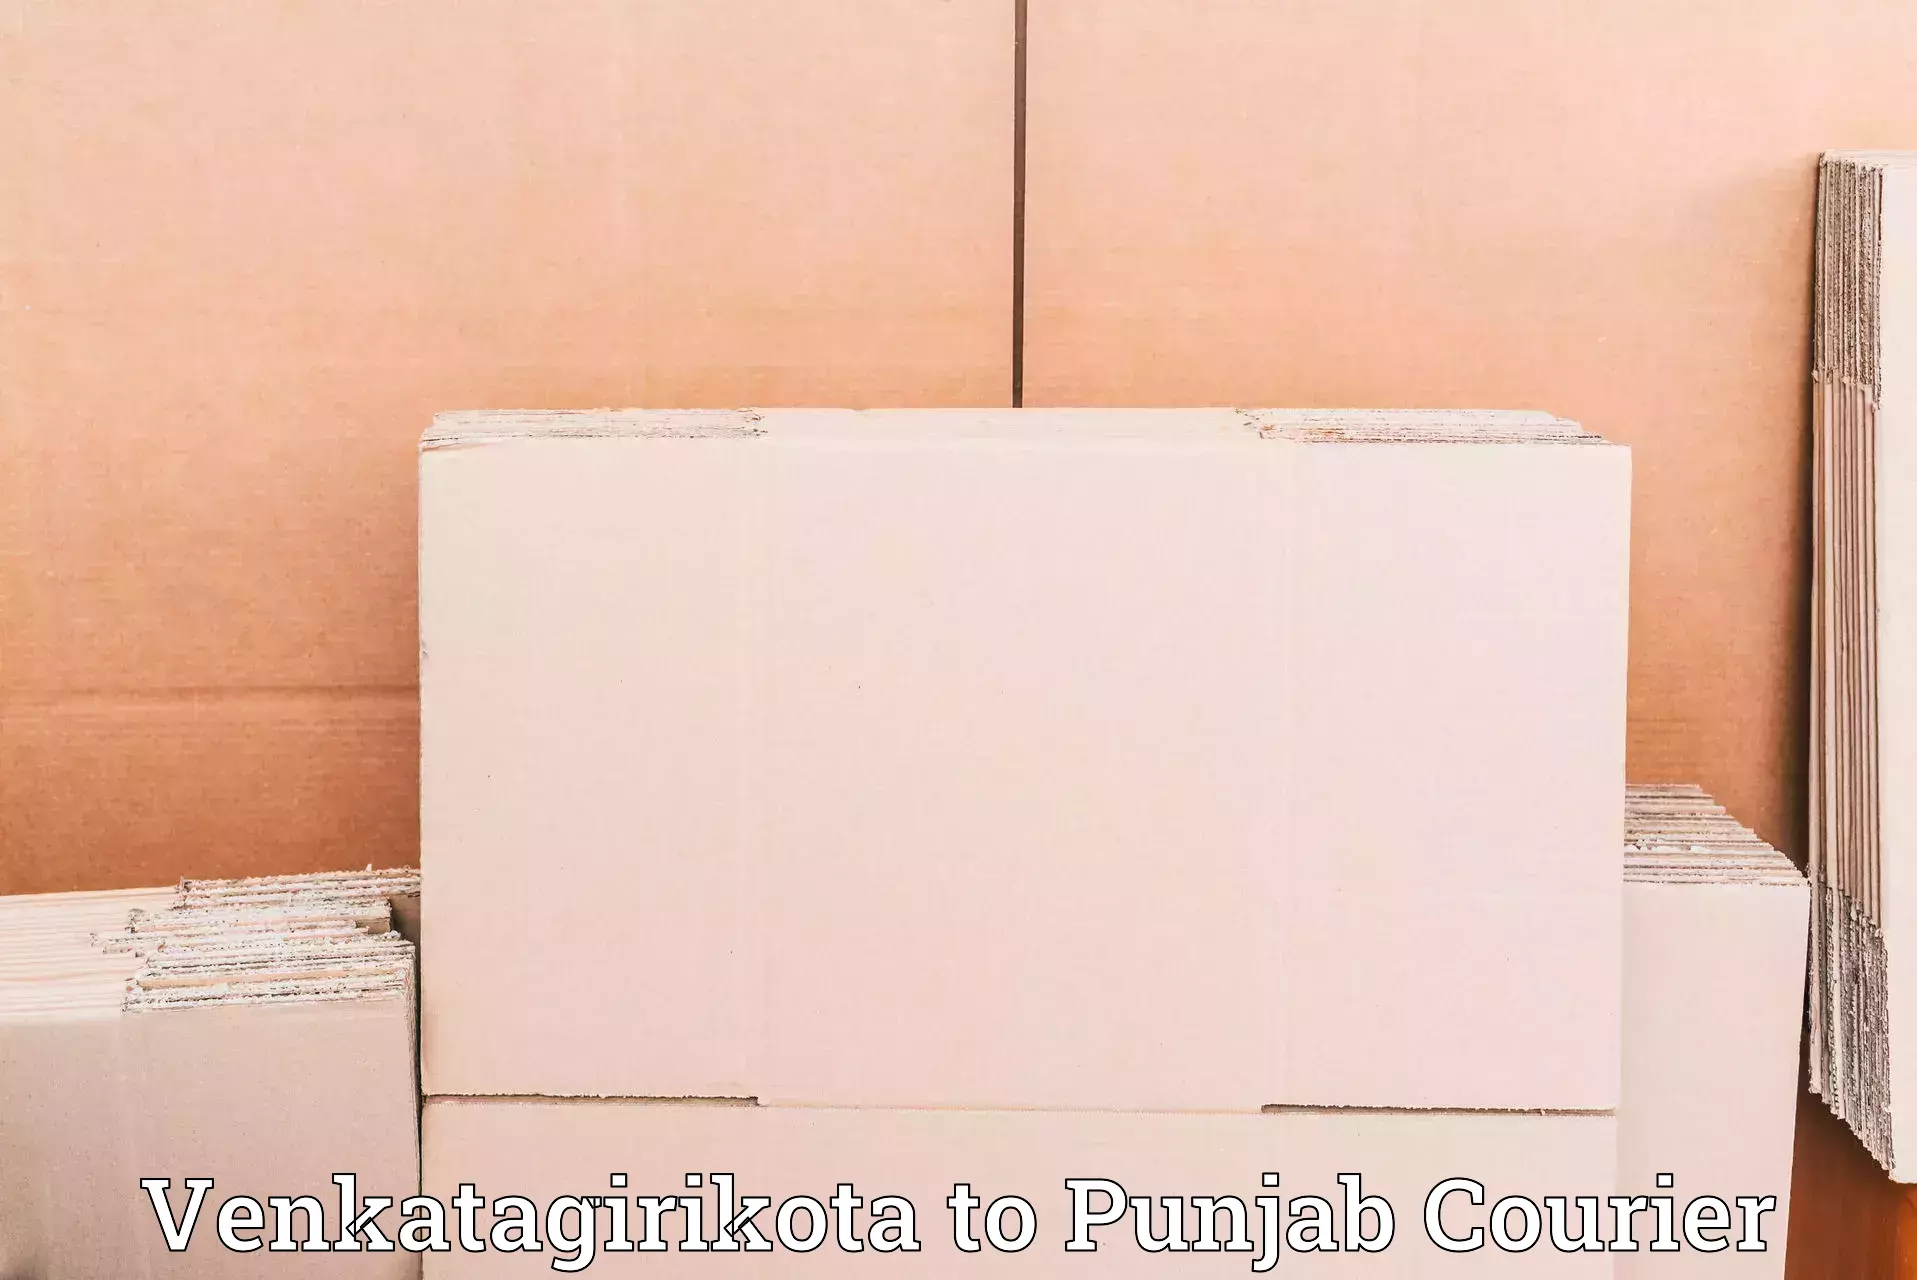 State-of-the-art courier technology Venkatagirikota to Anandpur Sahib